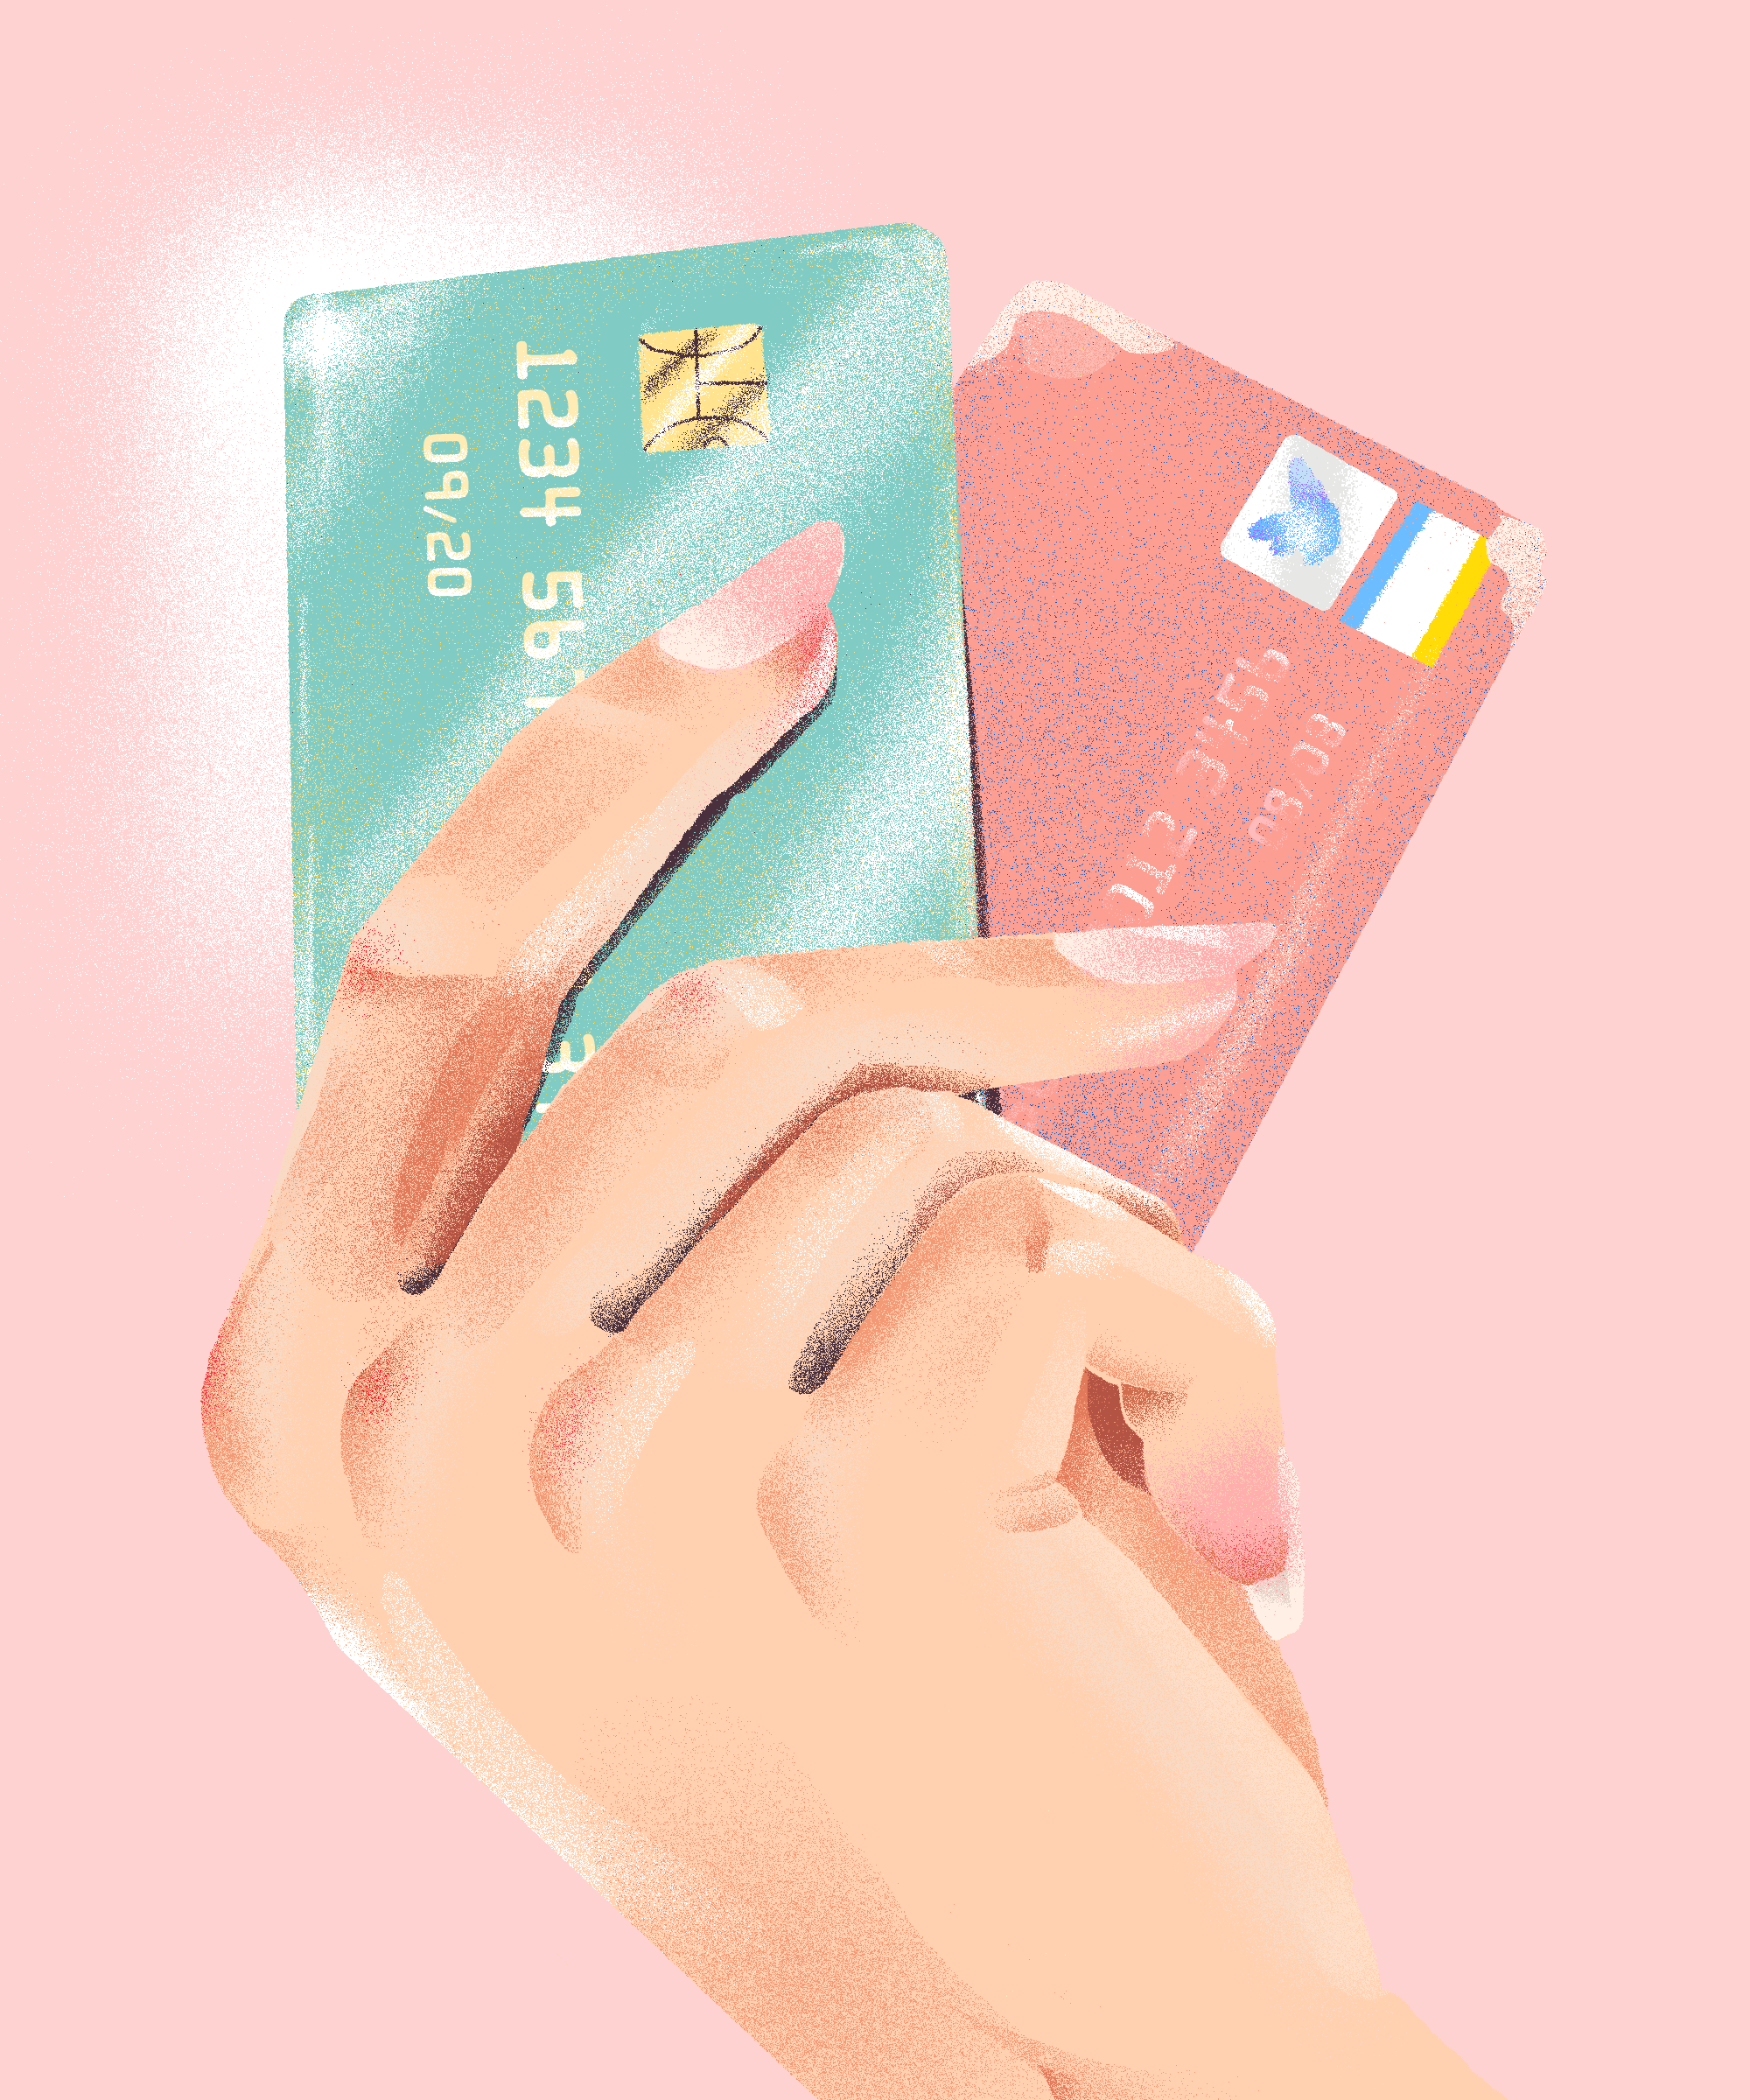  Visa Hintergrundbild 2000x2400. How To Get Your First Credit Card. Card illustration, Money poster, Instagram blog